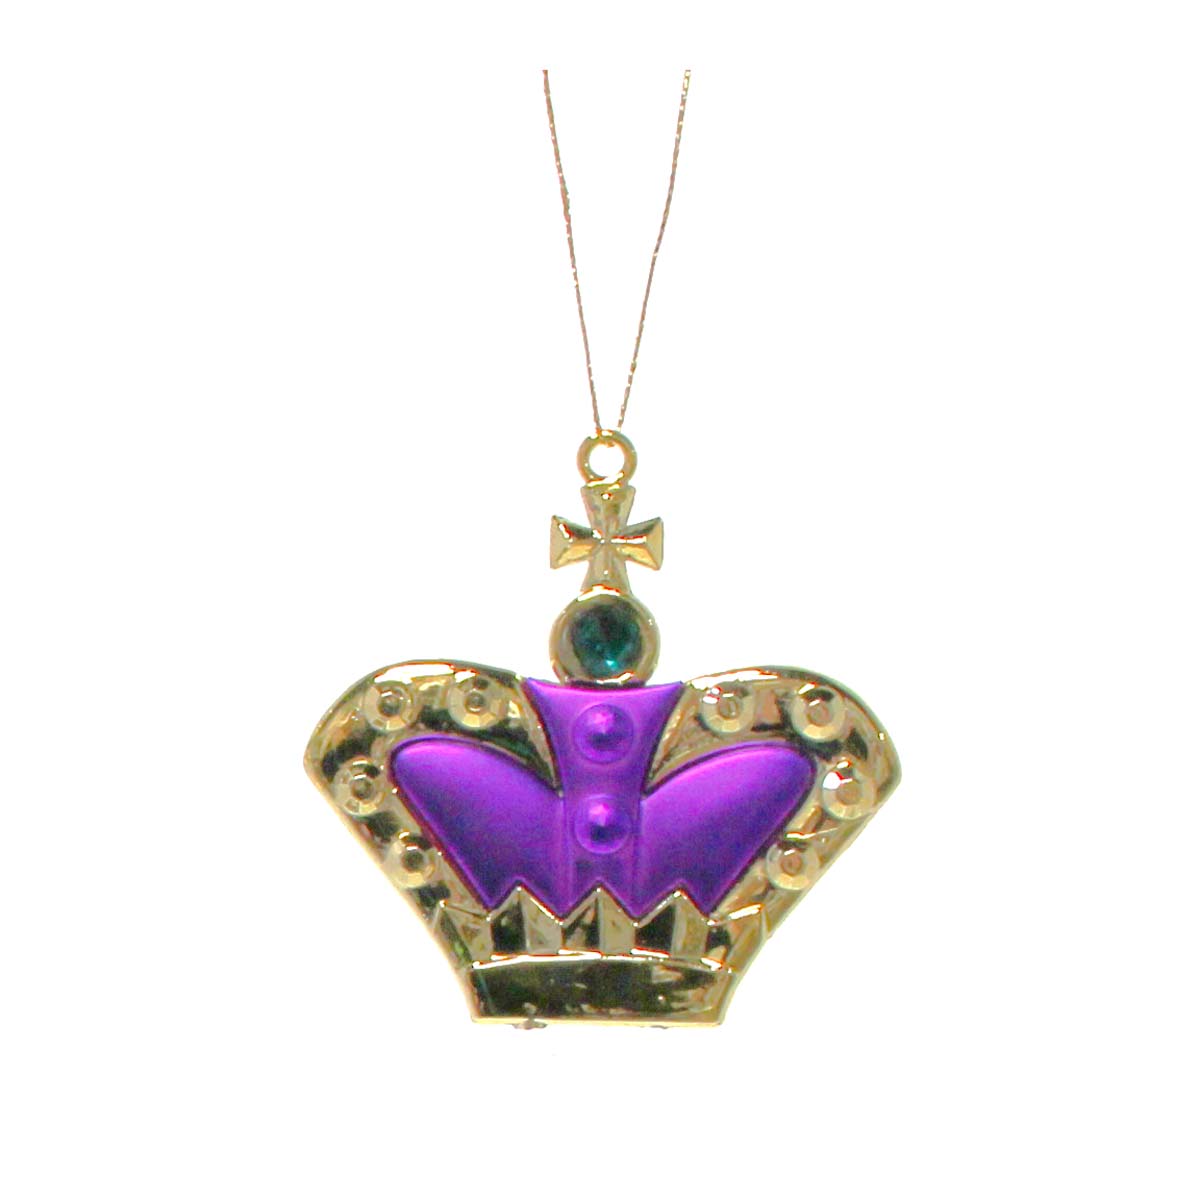 Crown Ornaments, Purple & Gold, 3.5" Mardi Gras